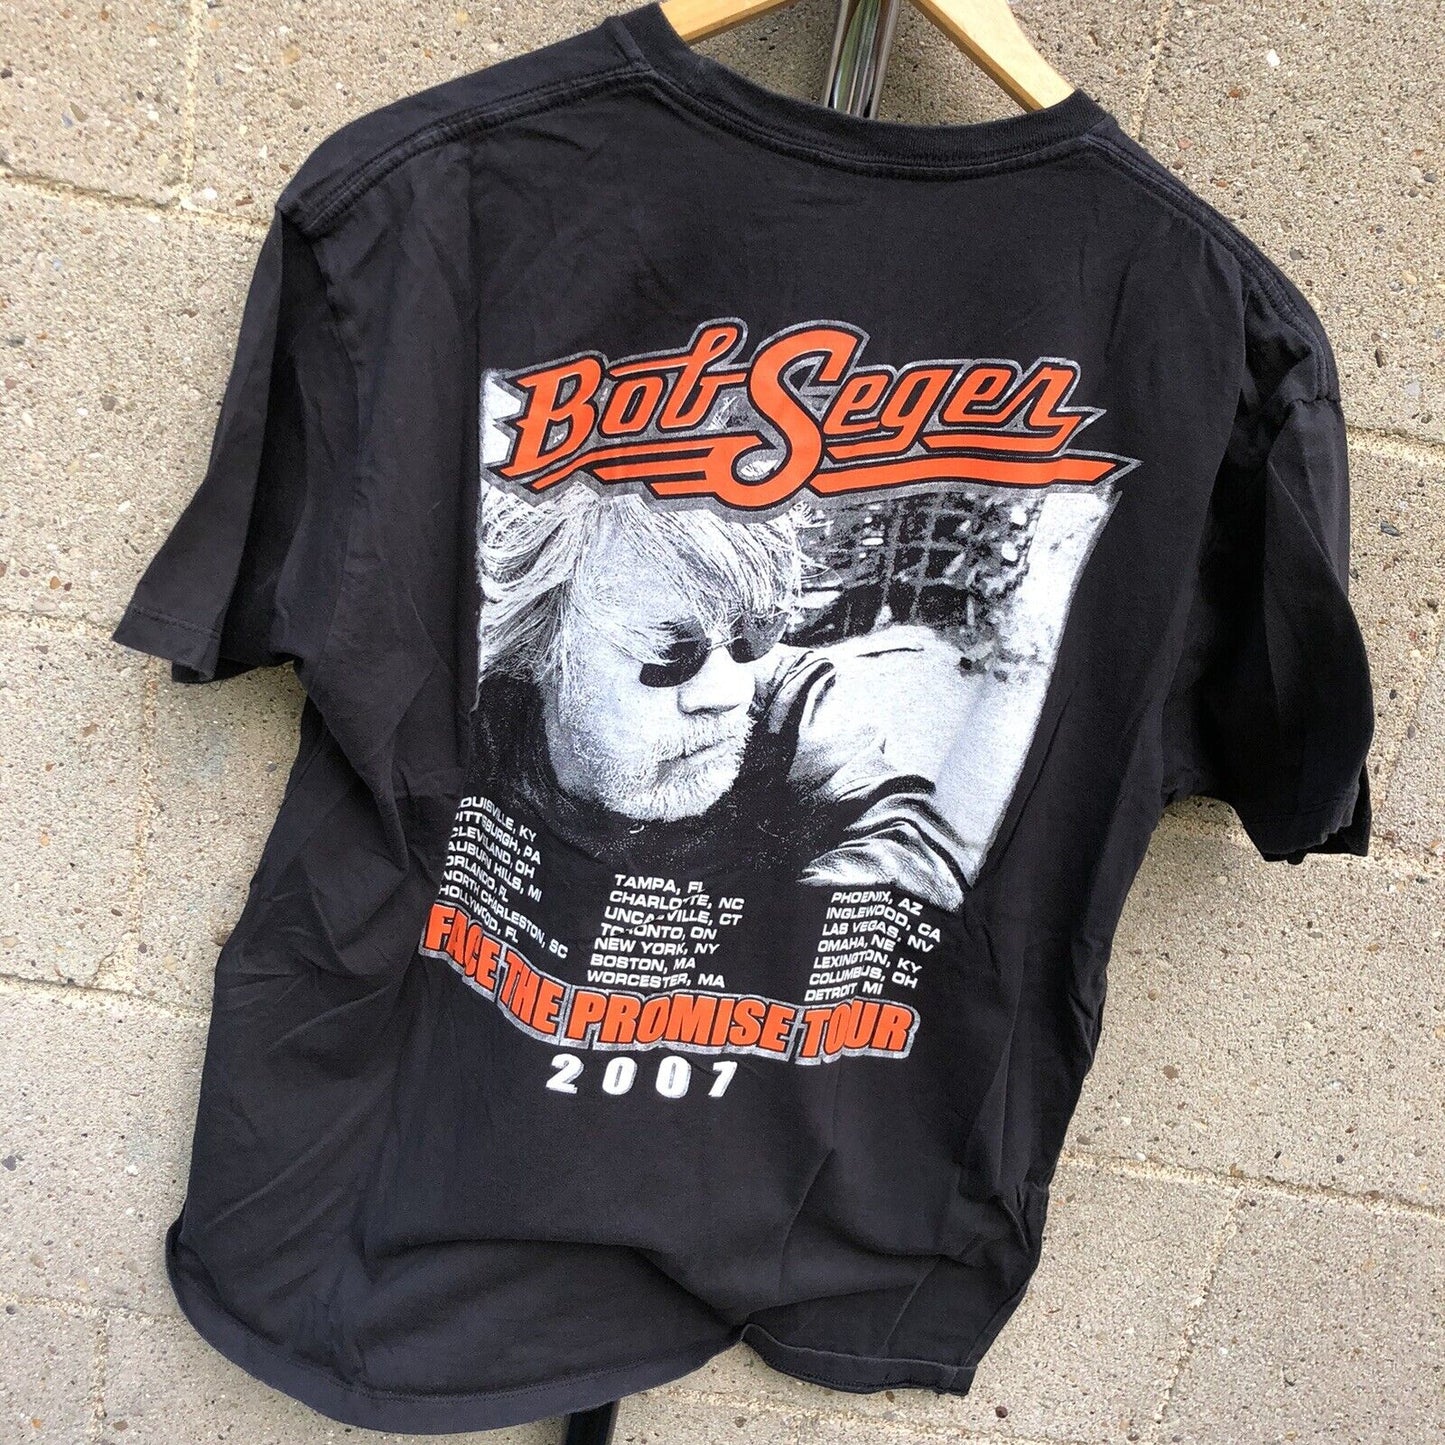 Bob Seger 2006 2007 Concert Tour T-shirt Large 2 sided